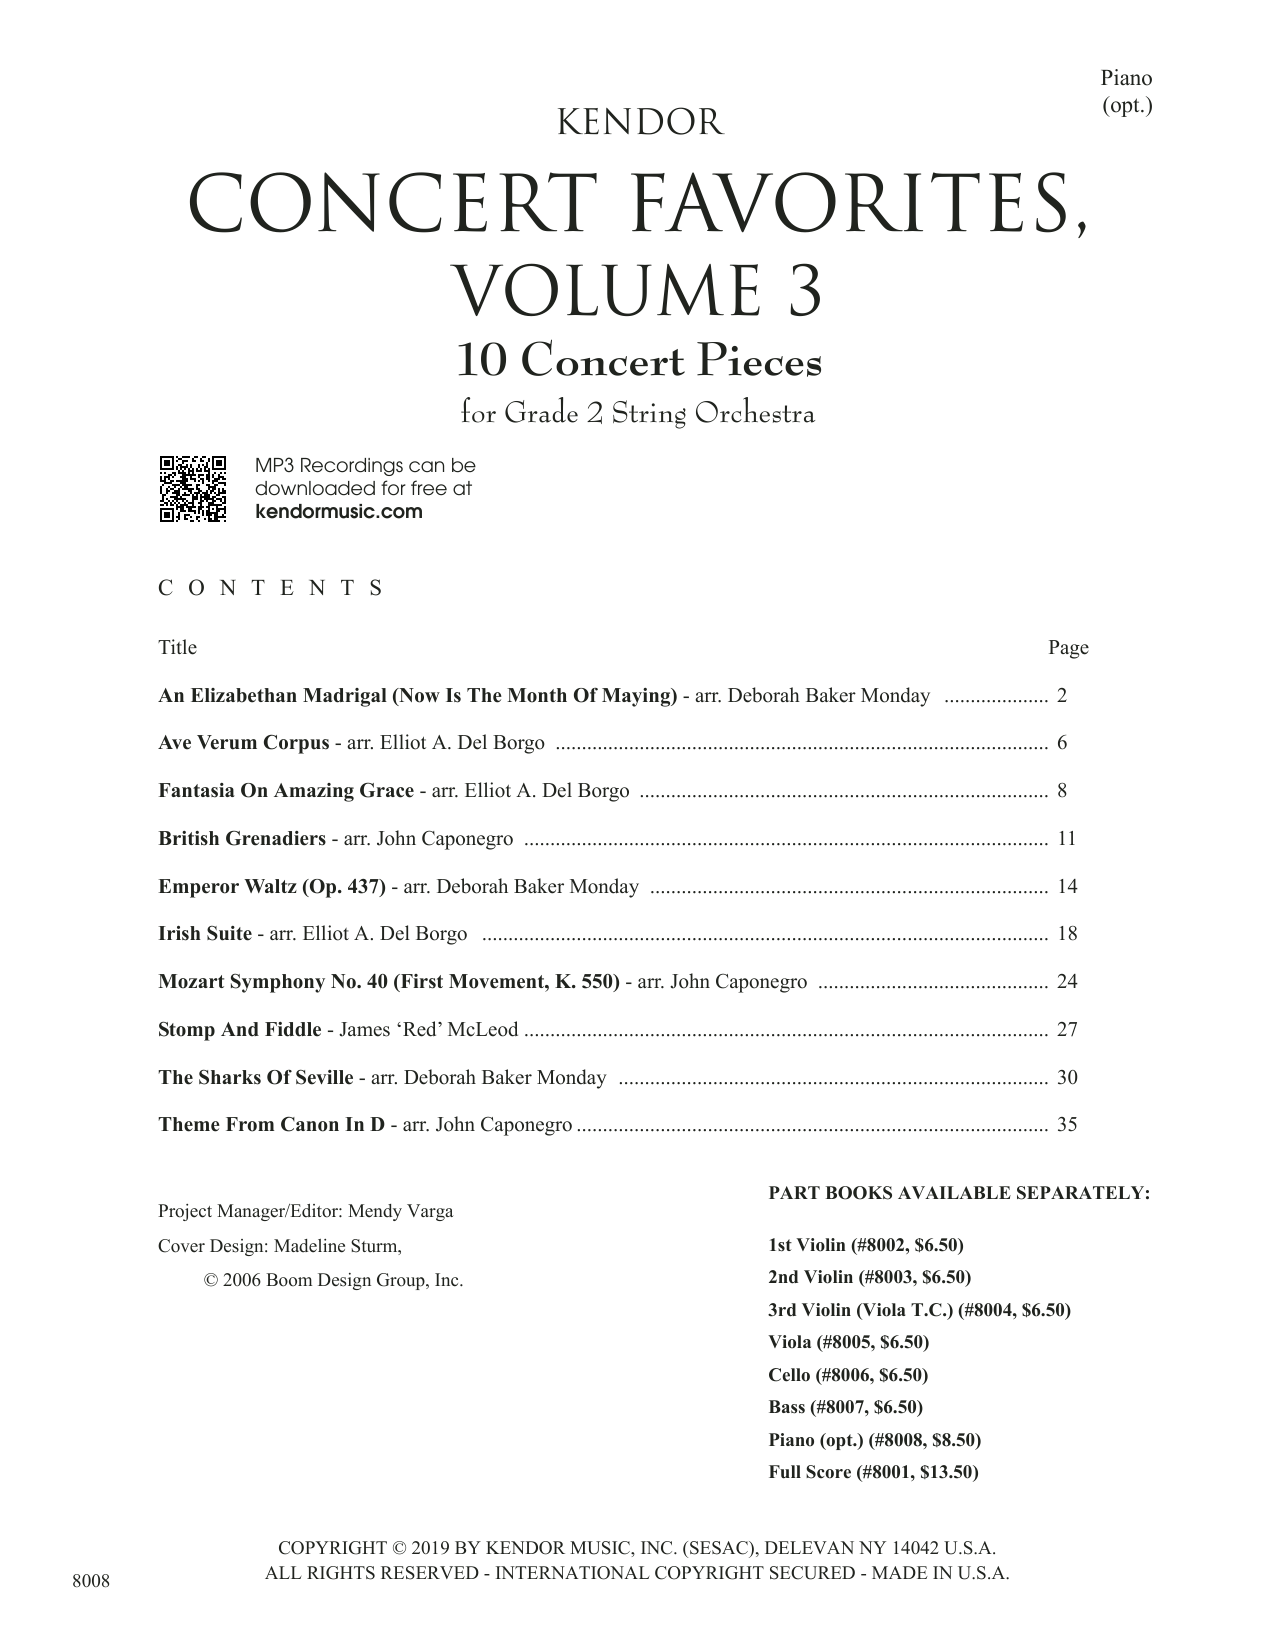 Download Various Kendor Concert Favorites, Volume 3 - Pi Sheet Music